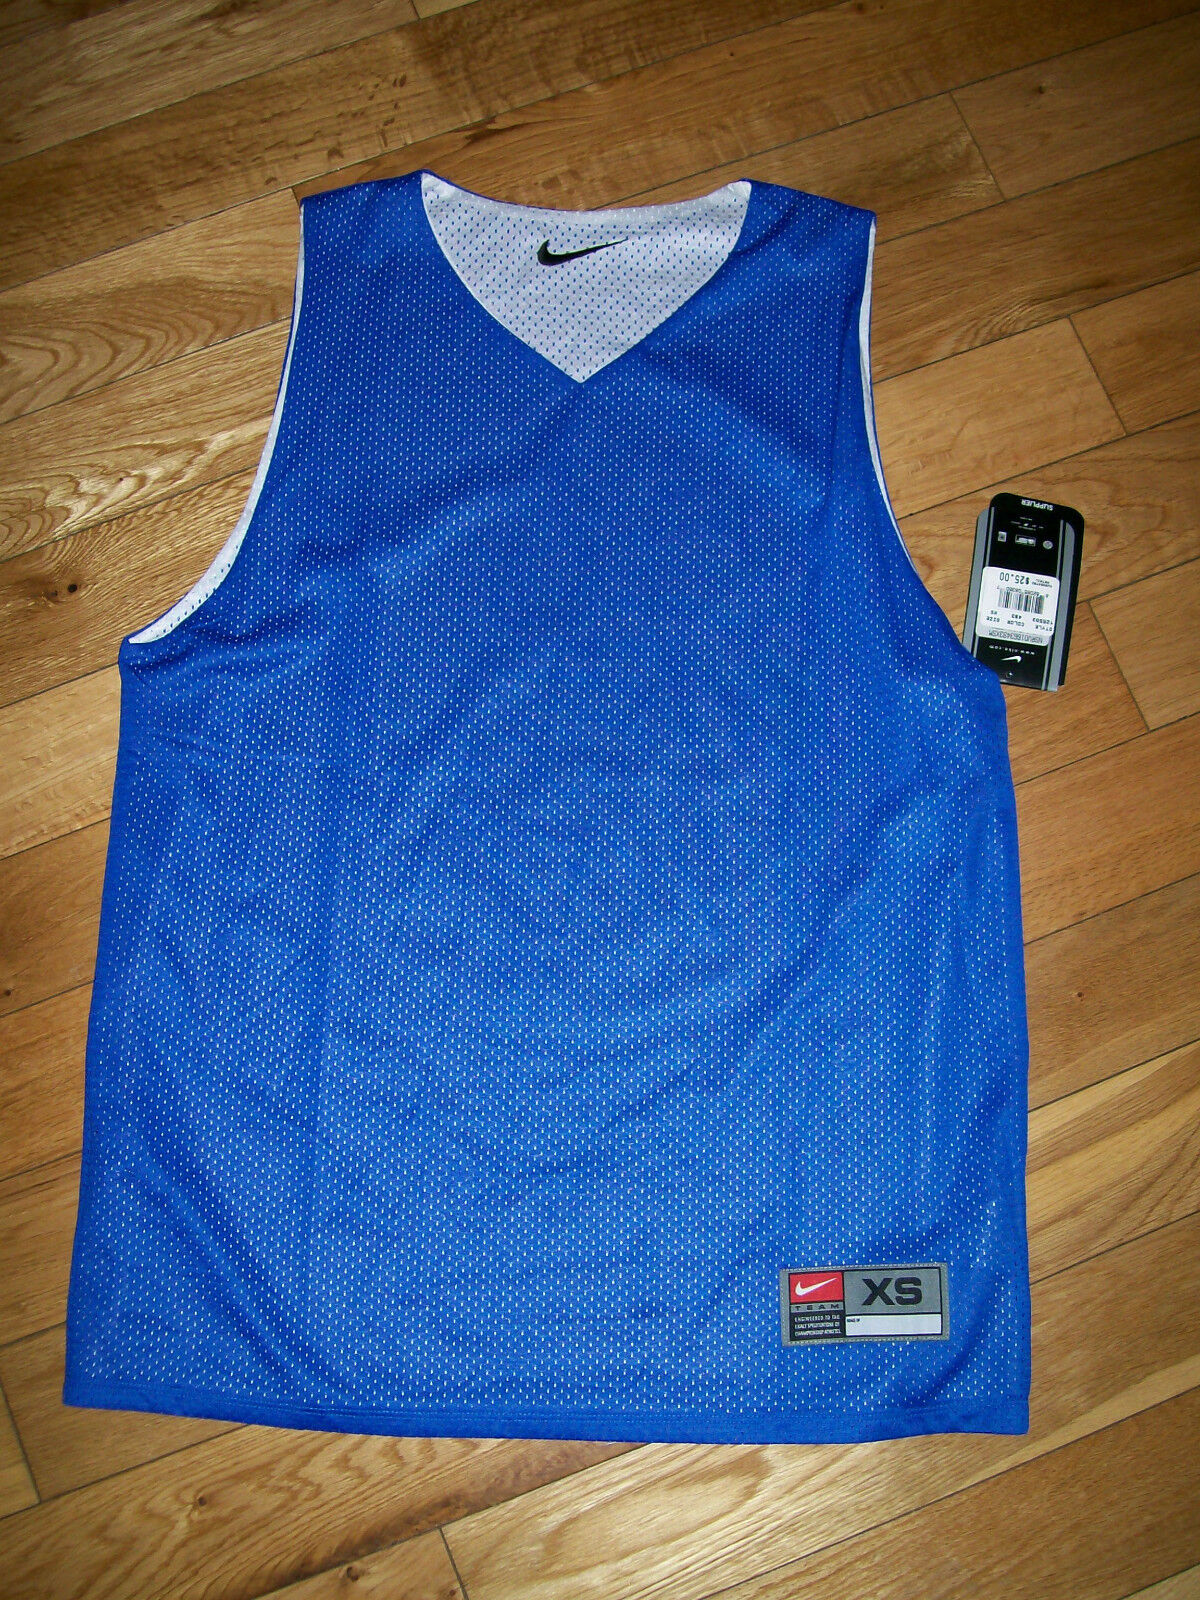 NWT Nike Reversible Large BLUE Basketball Mesh Jersey Mens Sz XS